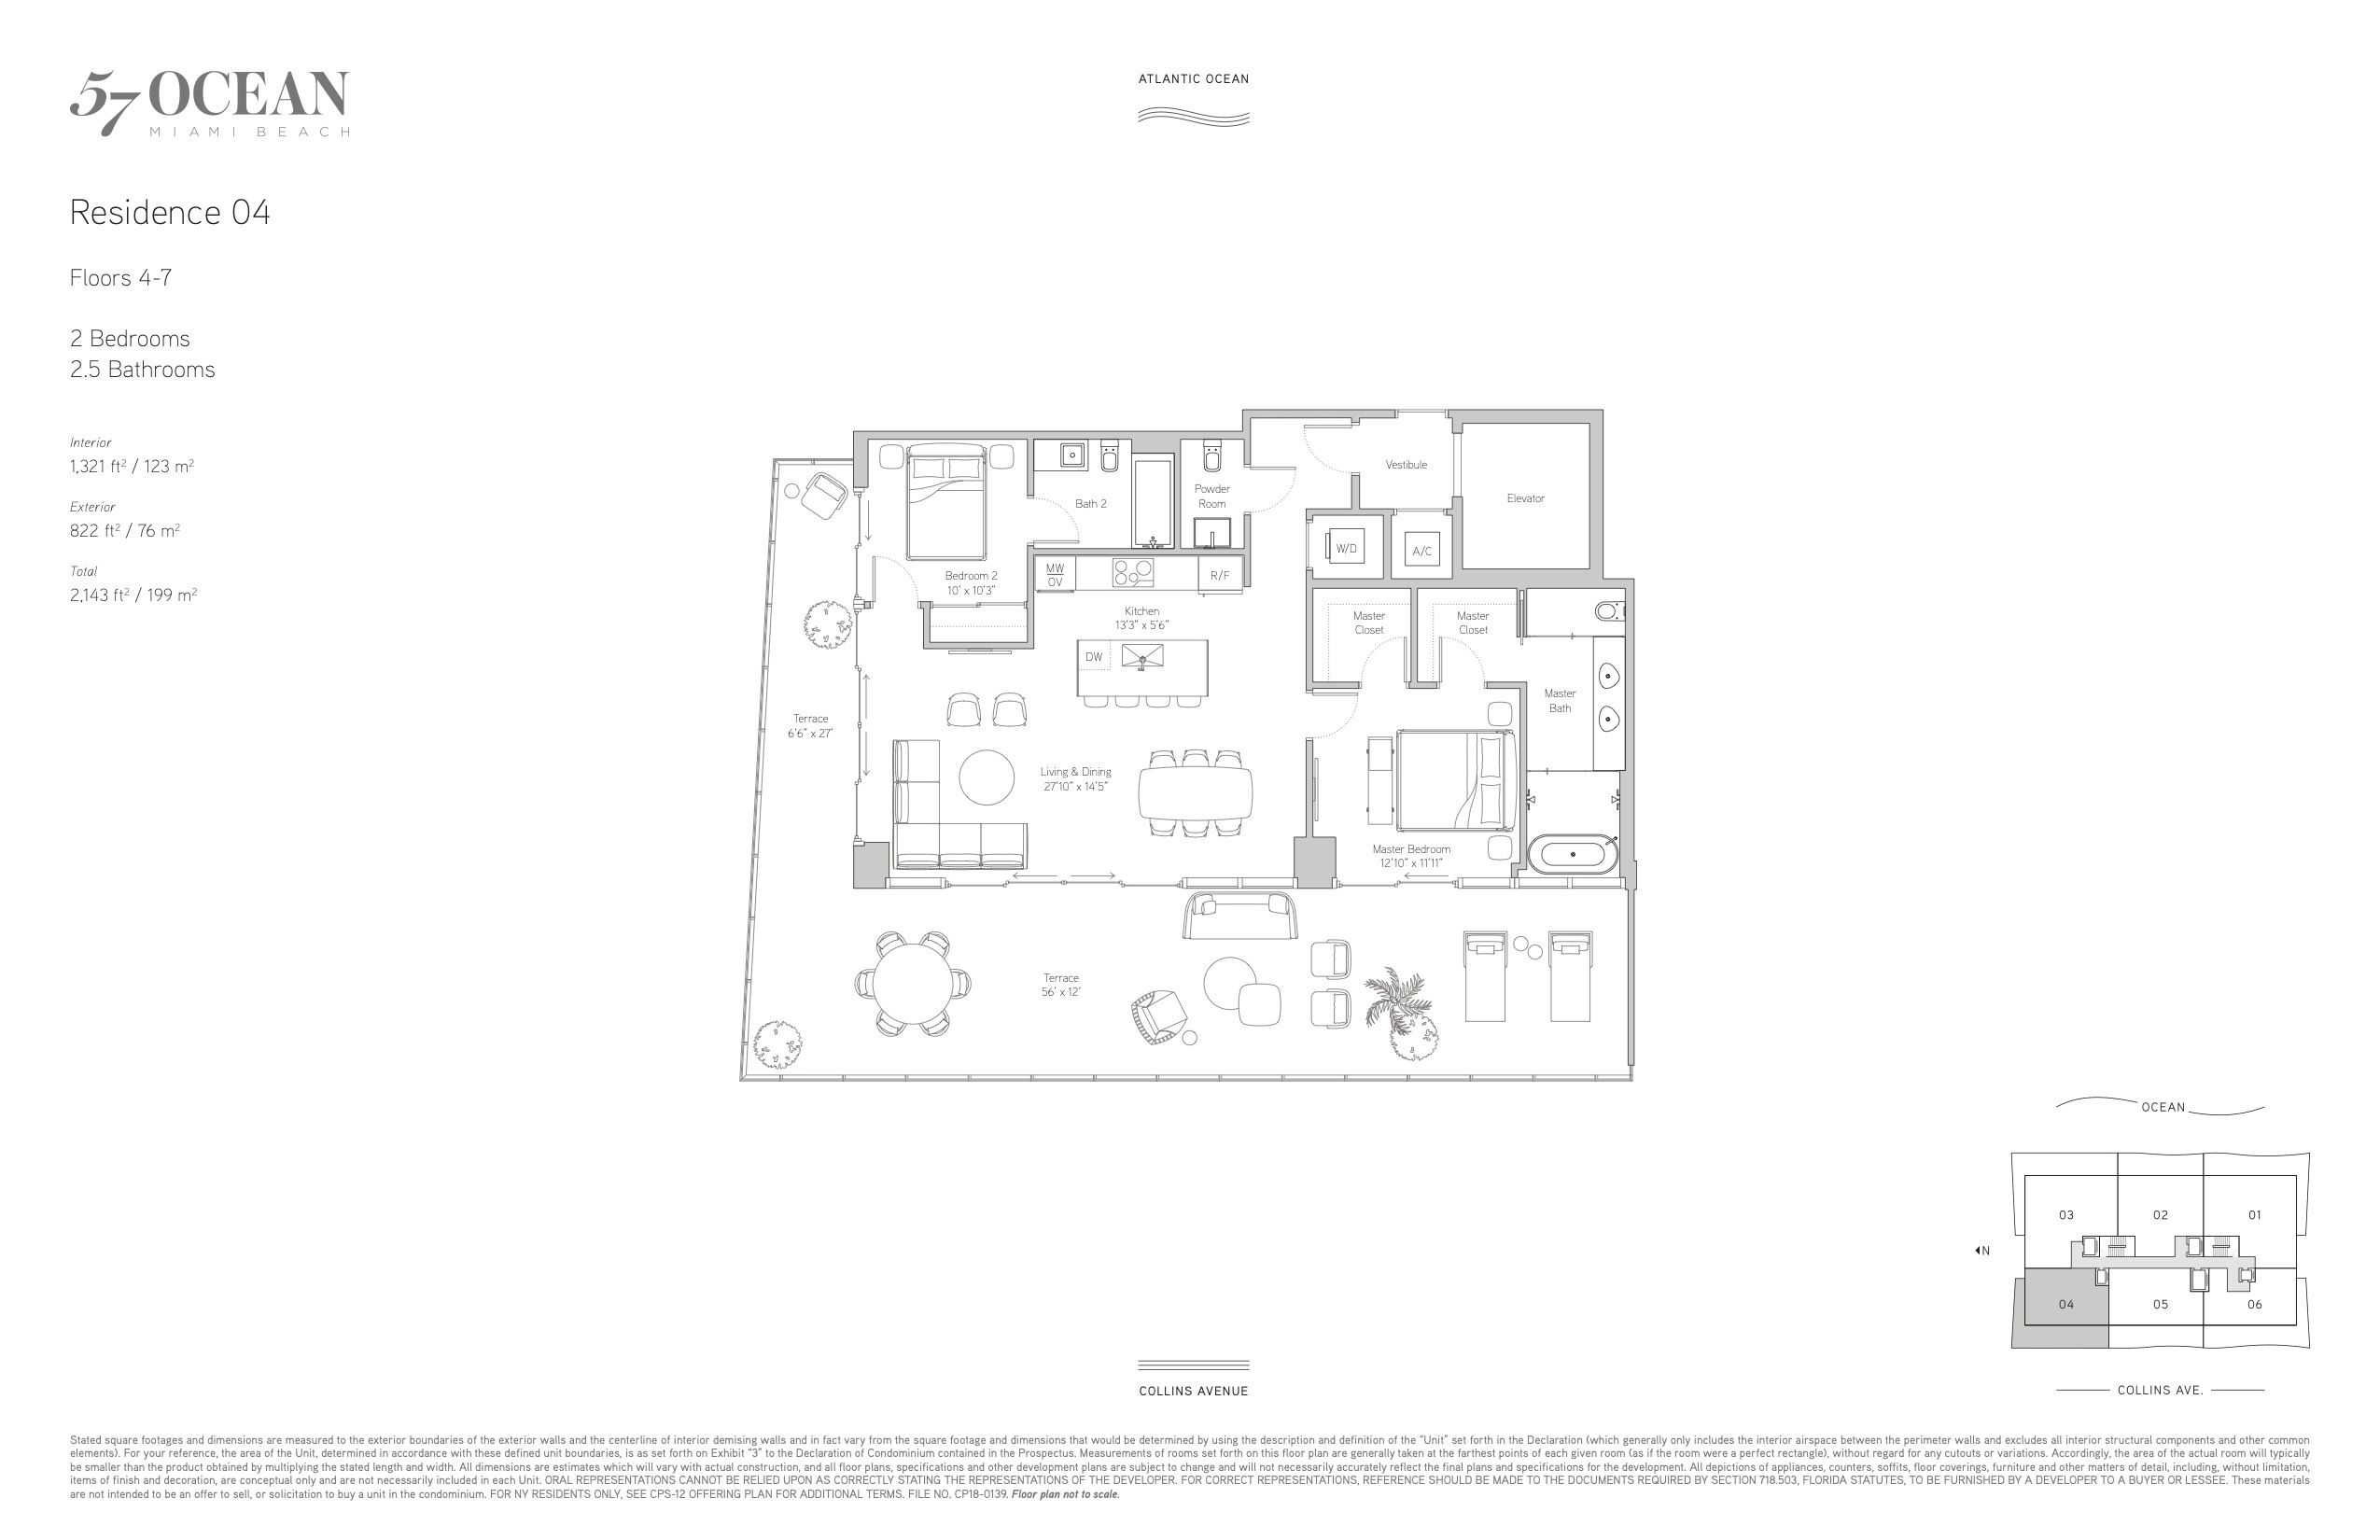 Floor Plan for 57 Ocean Miami Beach Floorplans, Residence 04